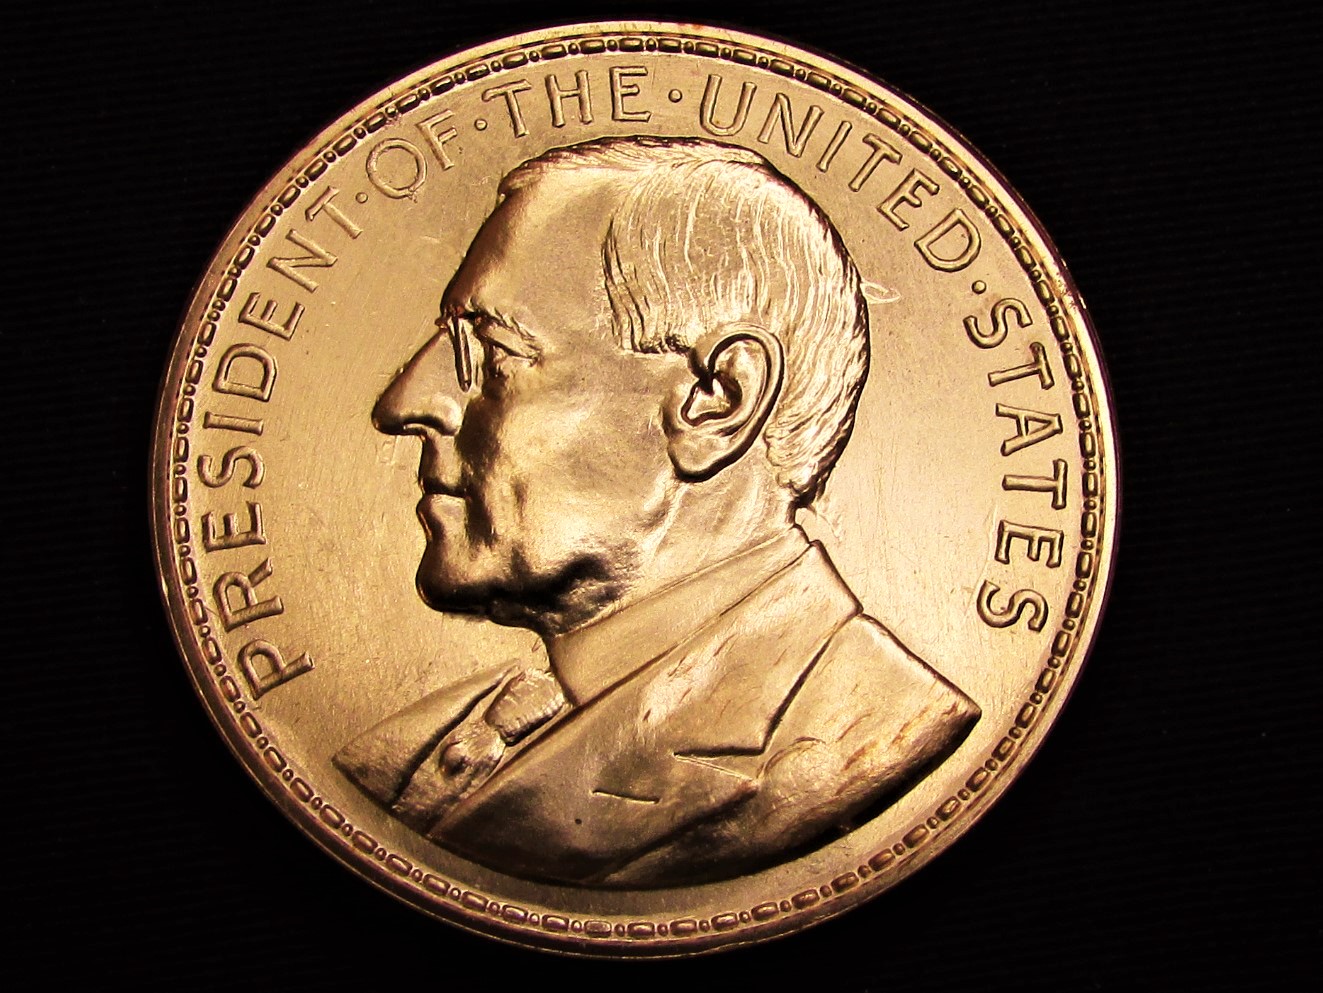 2020 Wilson 100 Year Anniversary Medal (Copper) - obverse.JPG